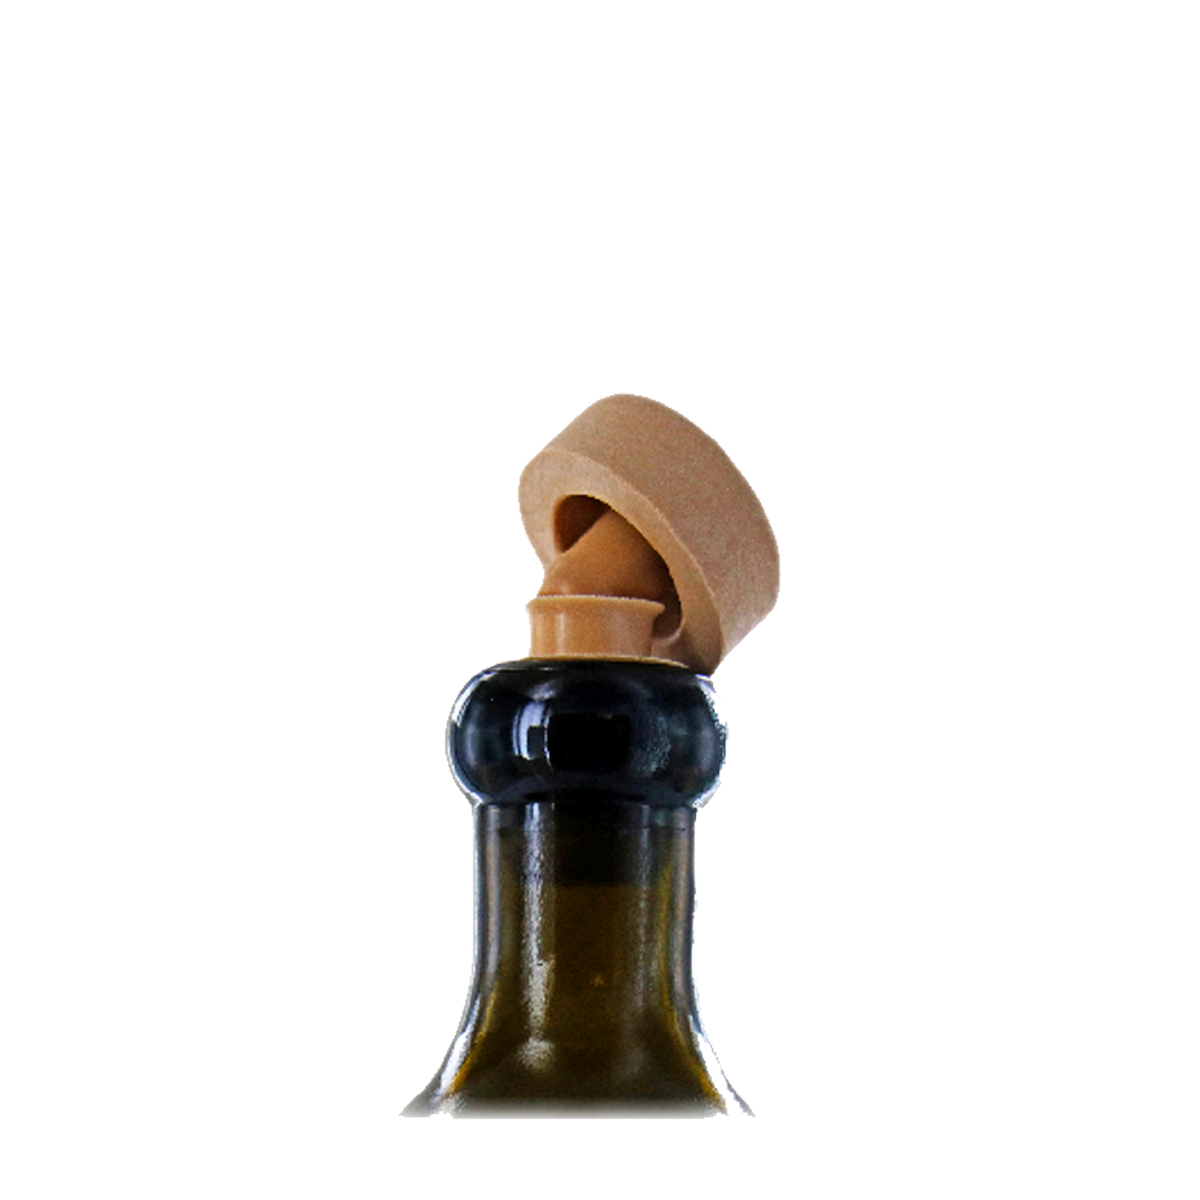 Verseur huile d'olive  Bec verseur huile & vinaigre - Oliviers & Co